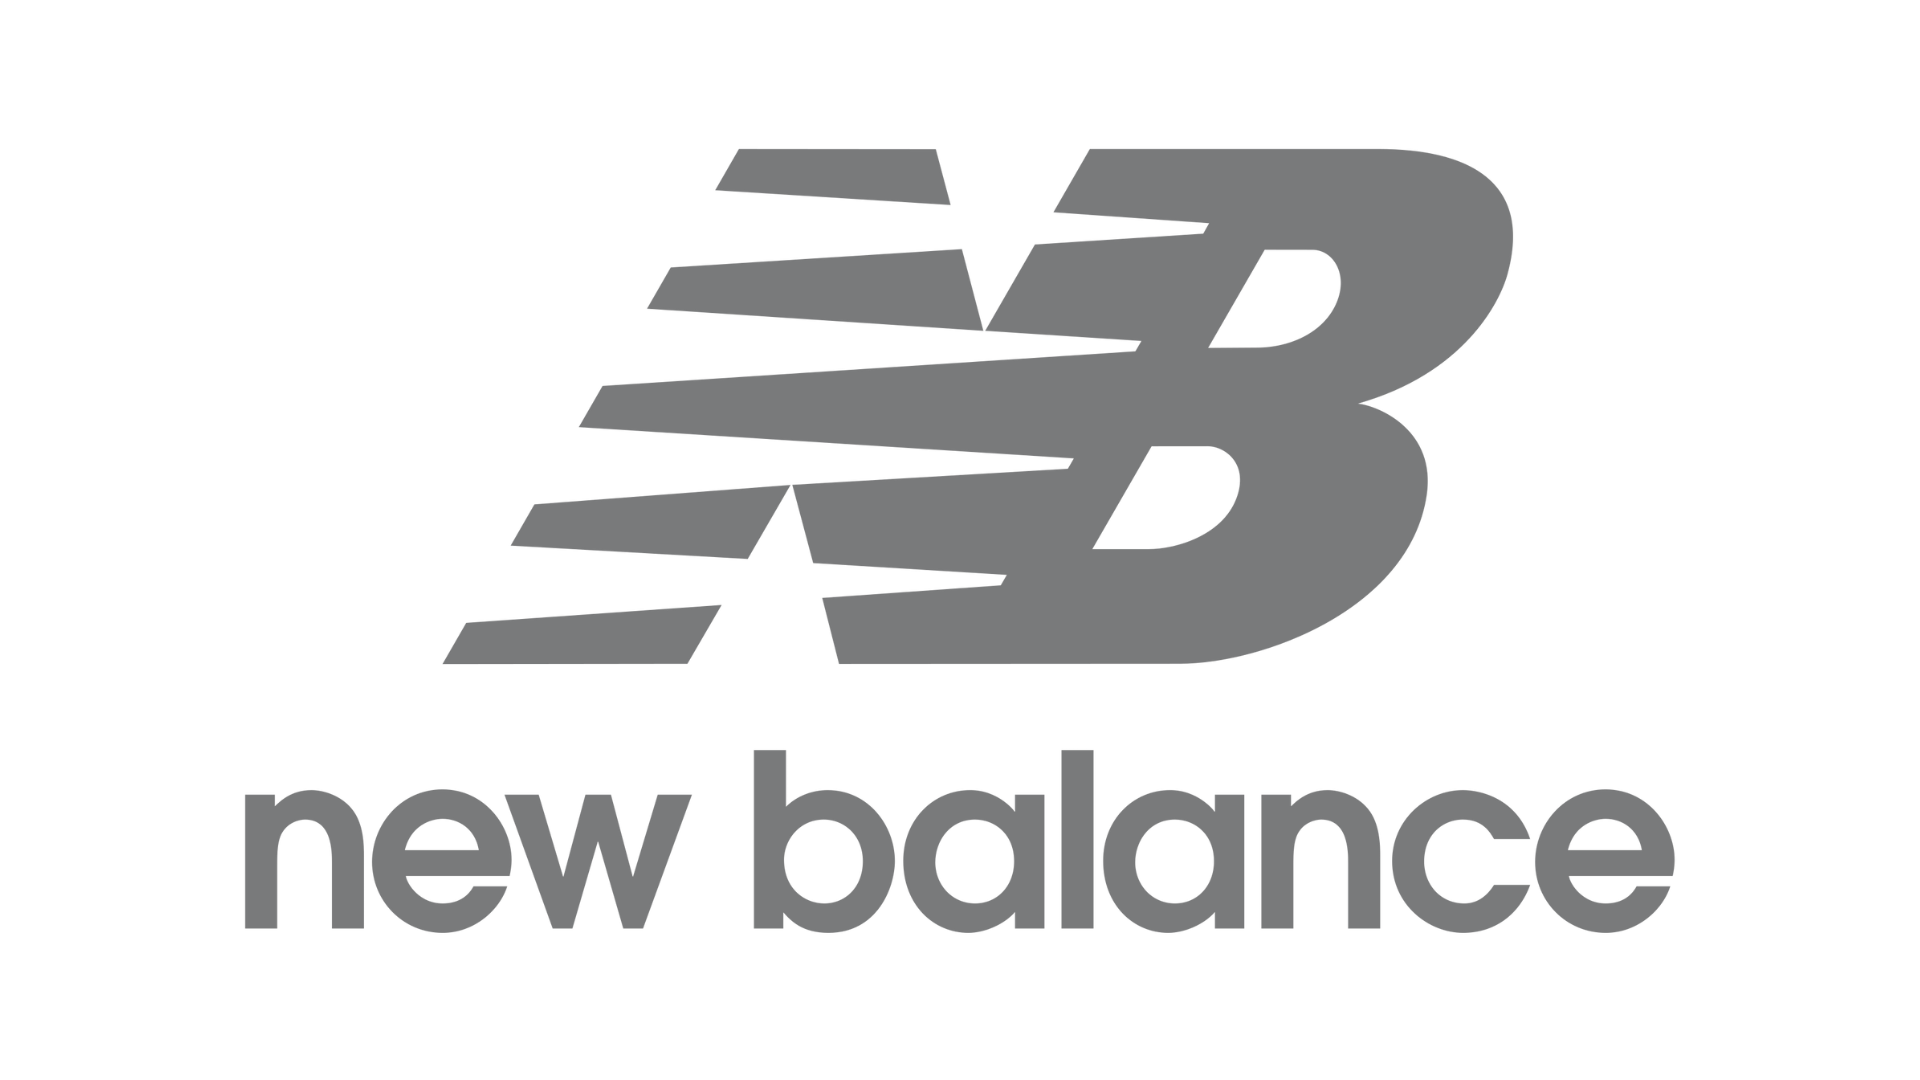 New Balance Logo.png